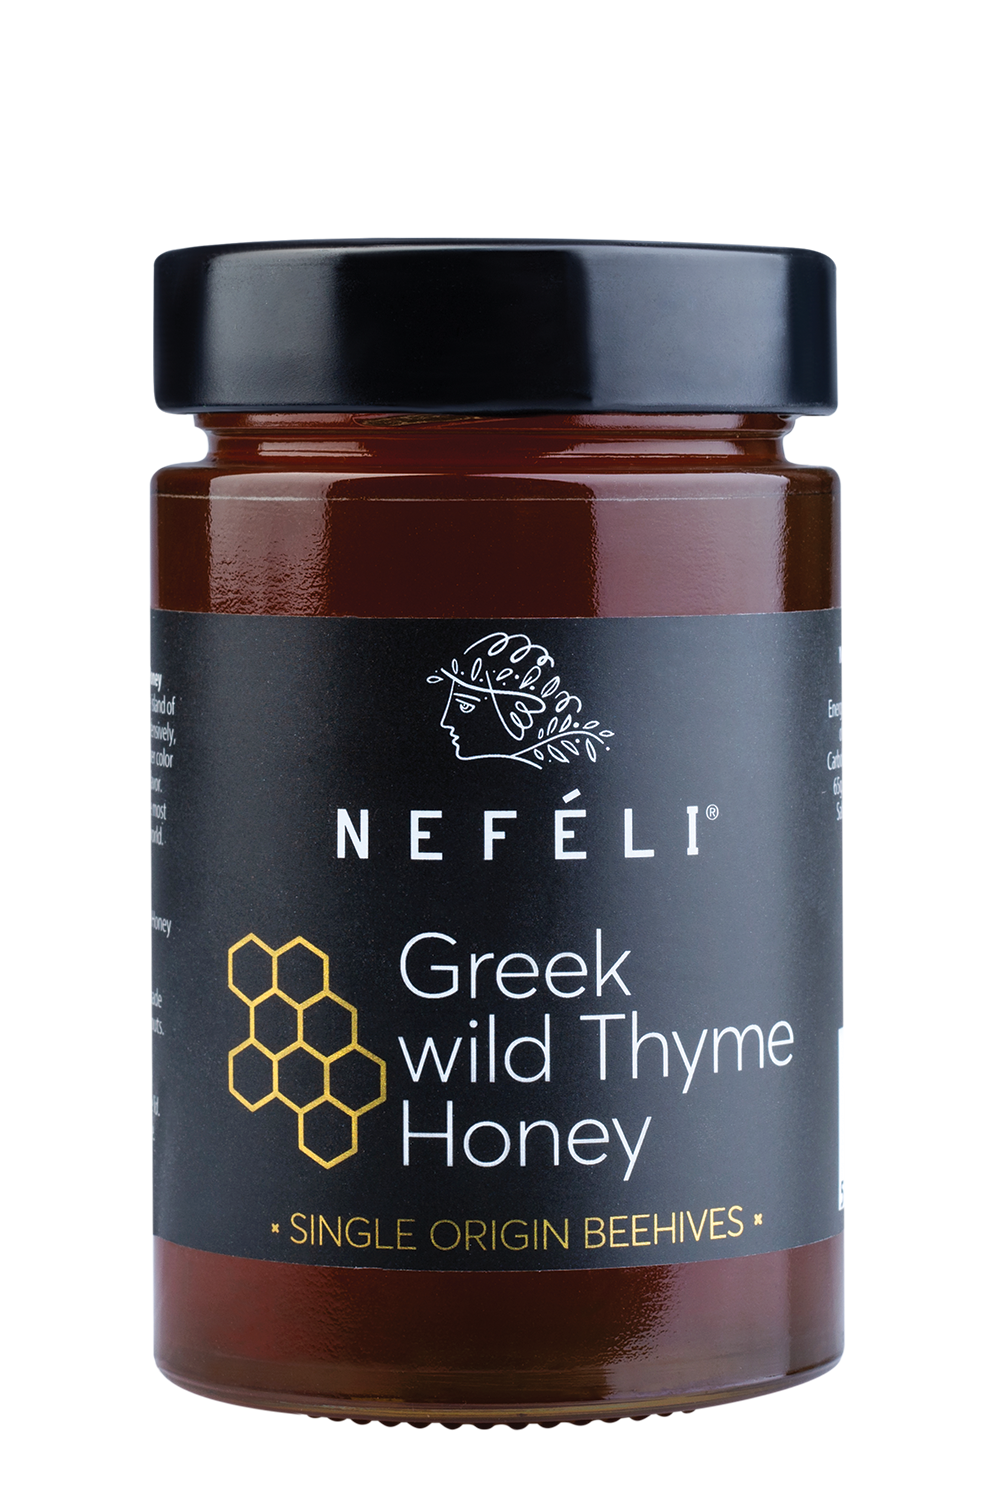 Greek wild thyme honey